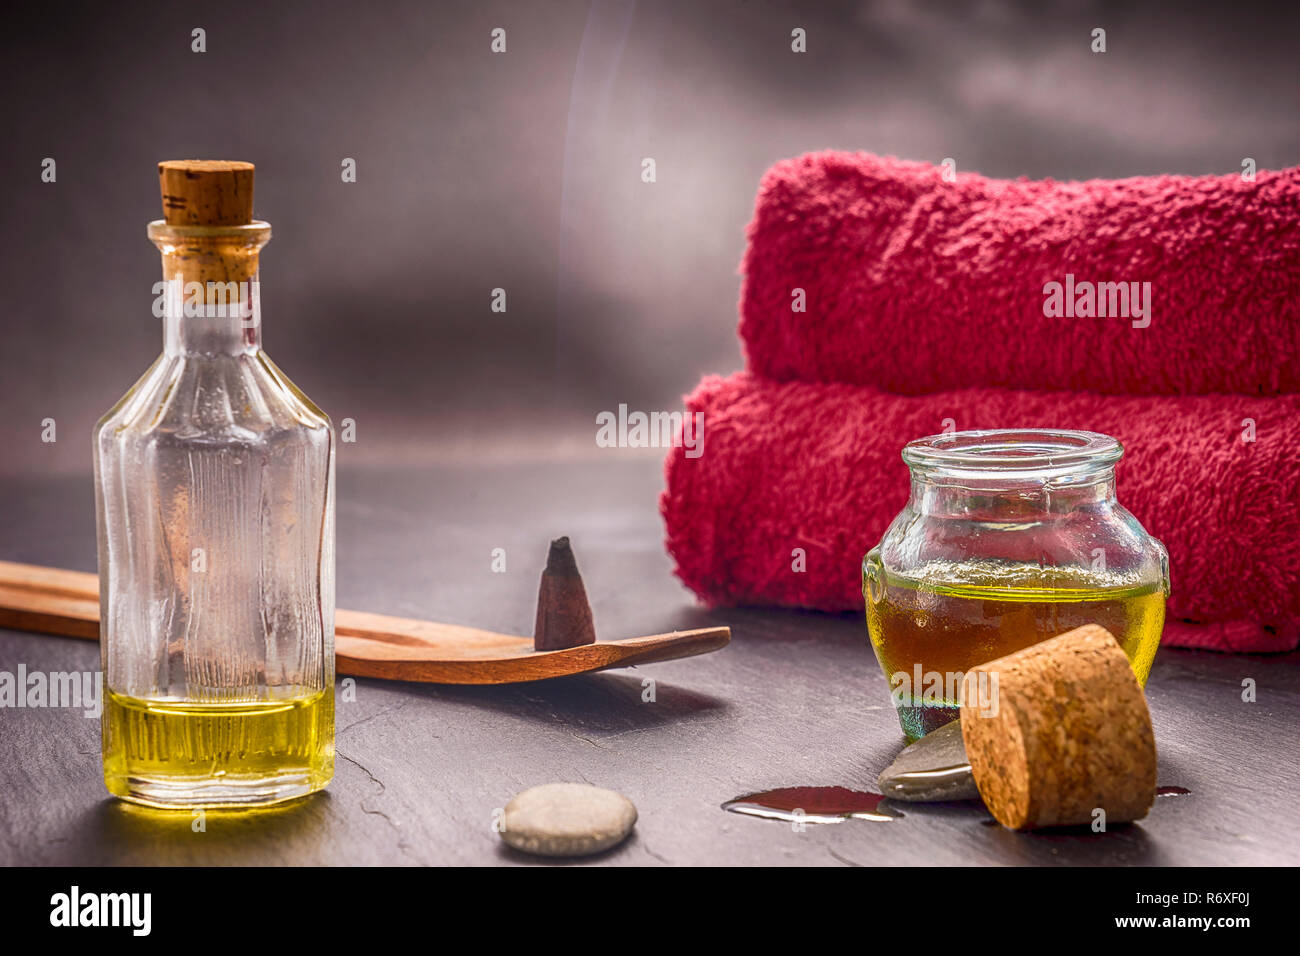 zen basalt stones and aroma oil on the stone background Stock Photo